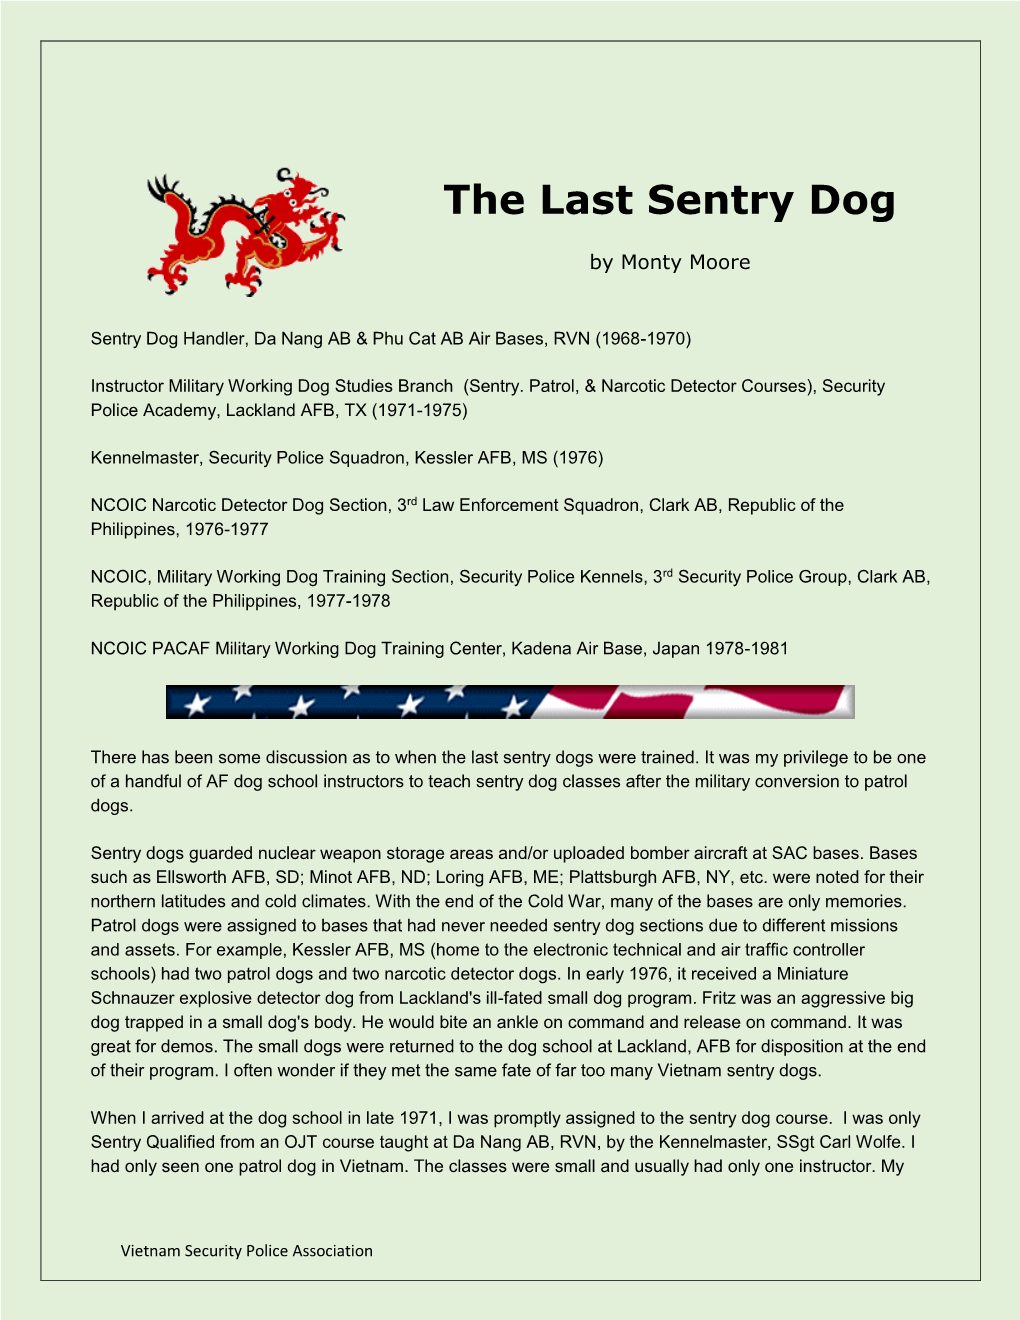 The Last Sentry Dog